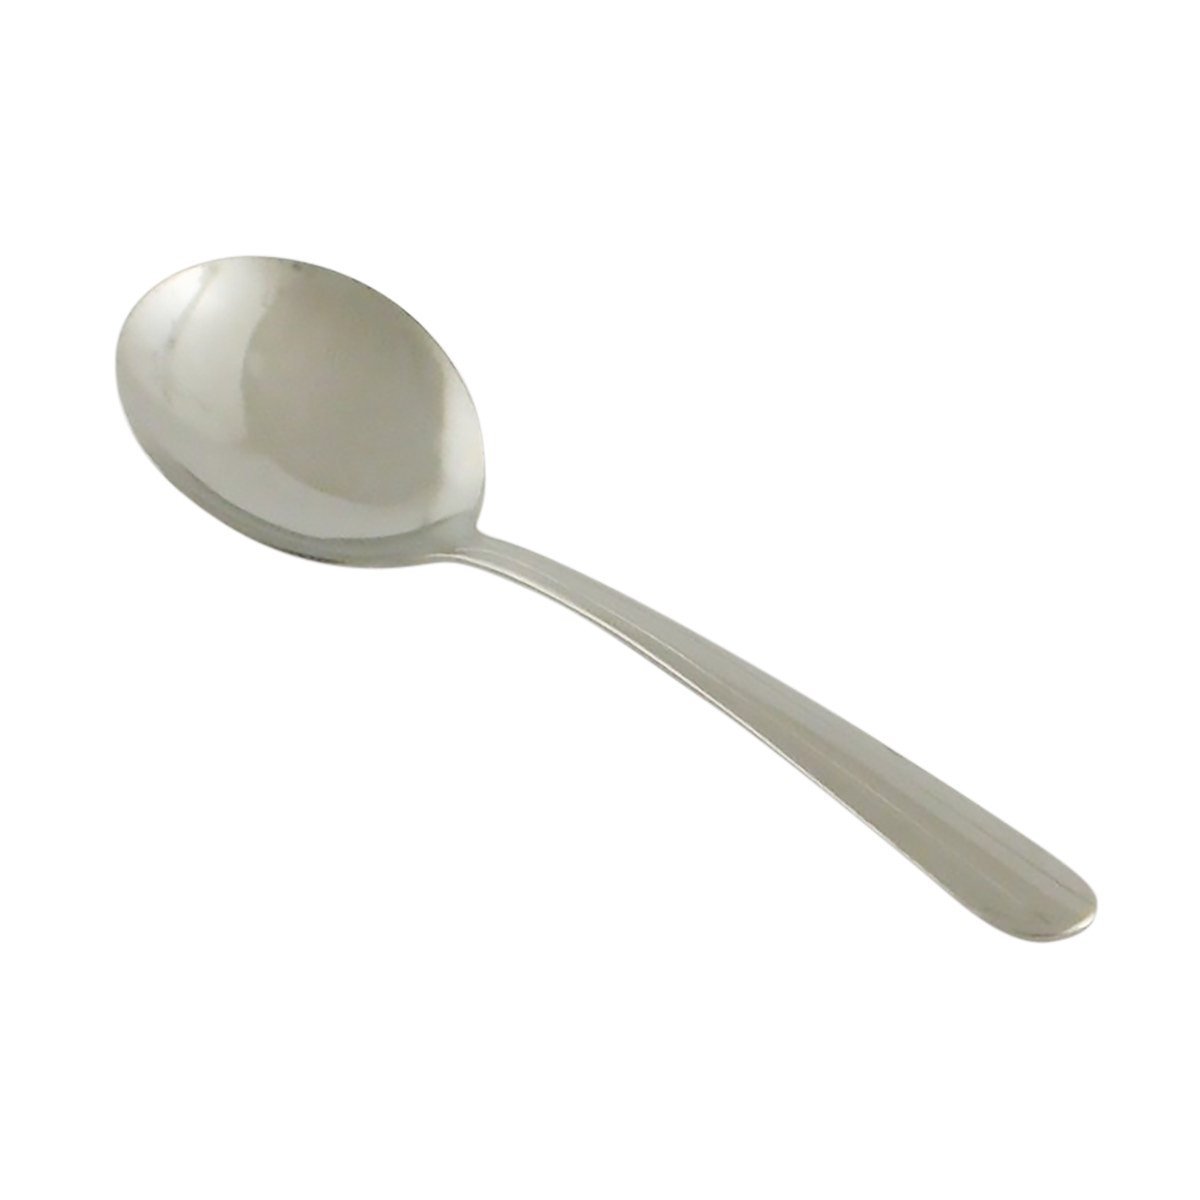 [#25] Windsor Boullion Spoon
(1DZ)